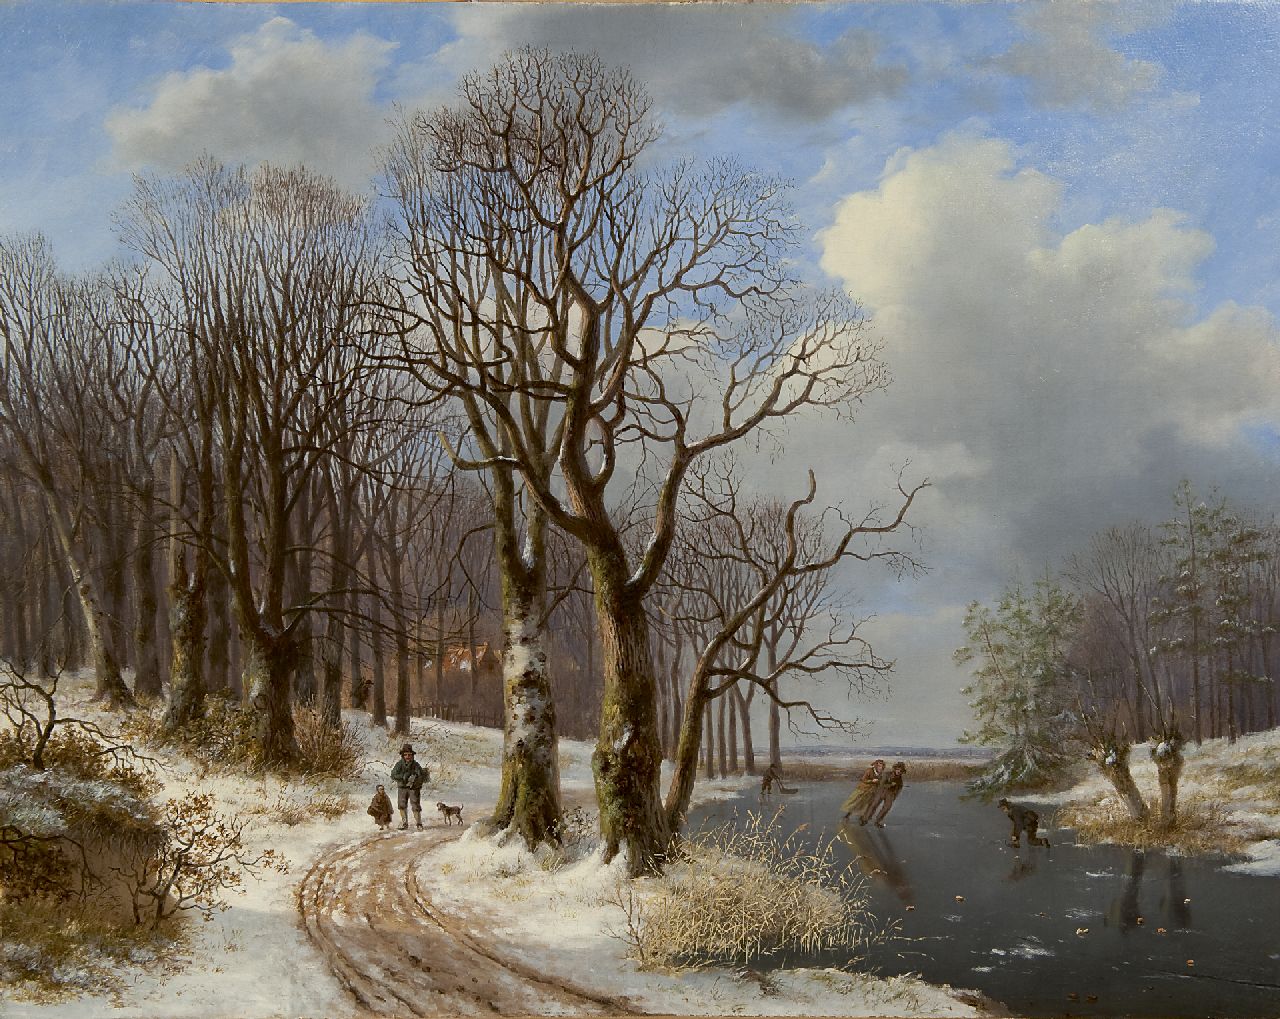 Mirani E.B.G.P.  | 'Everardus' Benedictus Gregorius Pagano Mirani, A winter landscape with skaters and countryfolk, Öl auf Leinwand 55,7 x 72,5 cm